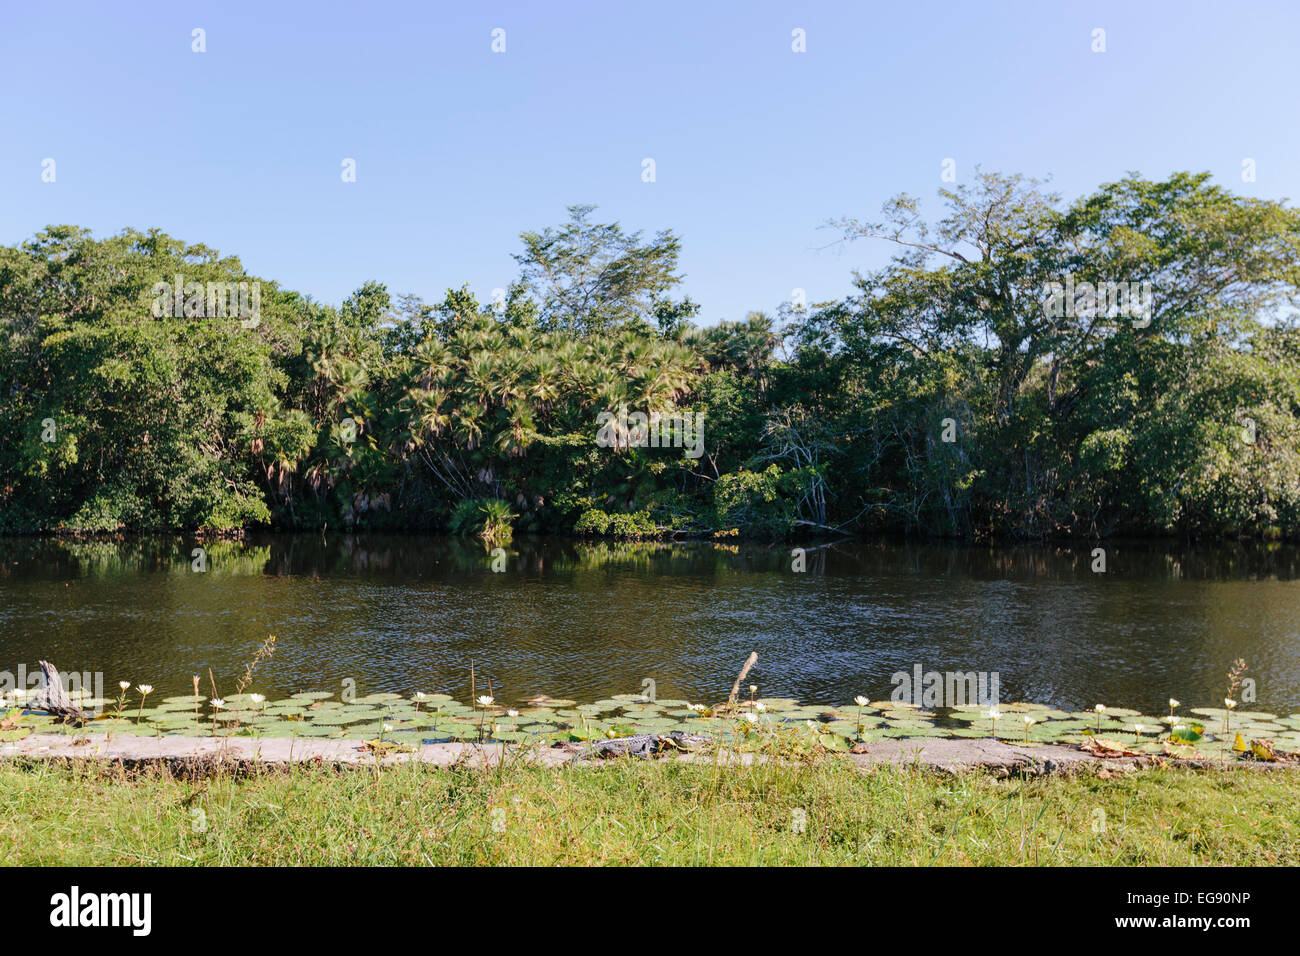 Crocodile sunning itself on the banks of New River, Orange Walk, Belize Stock Photo